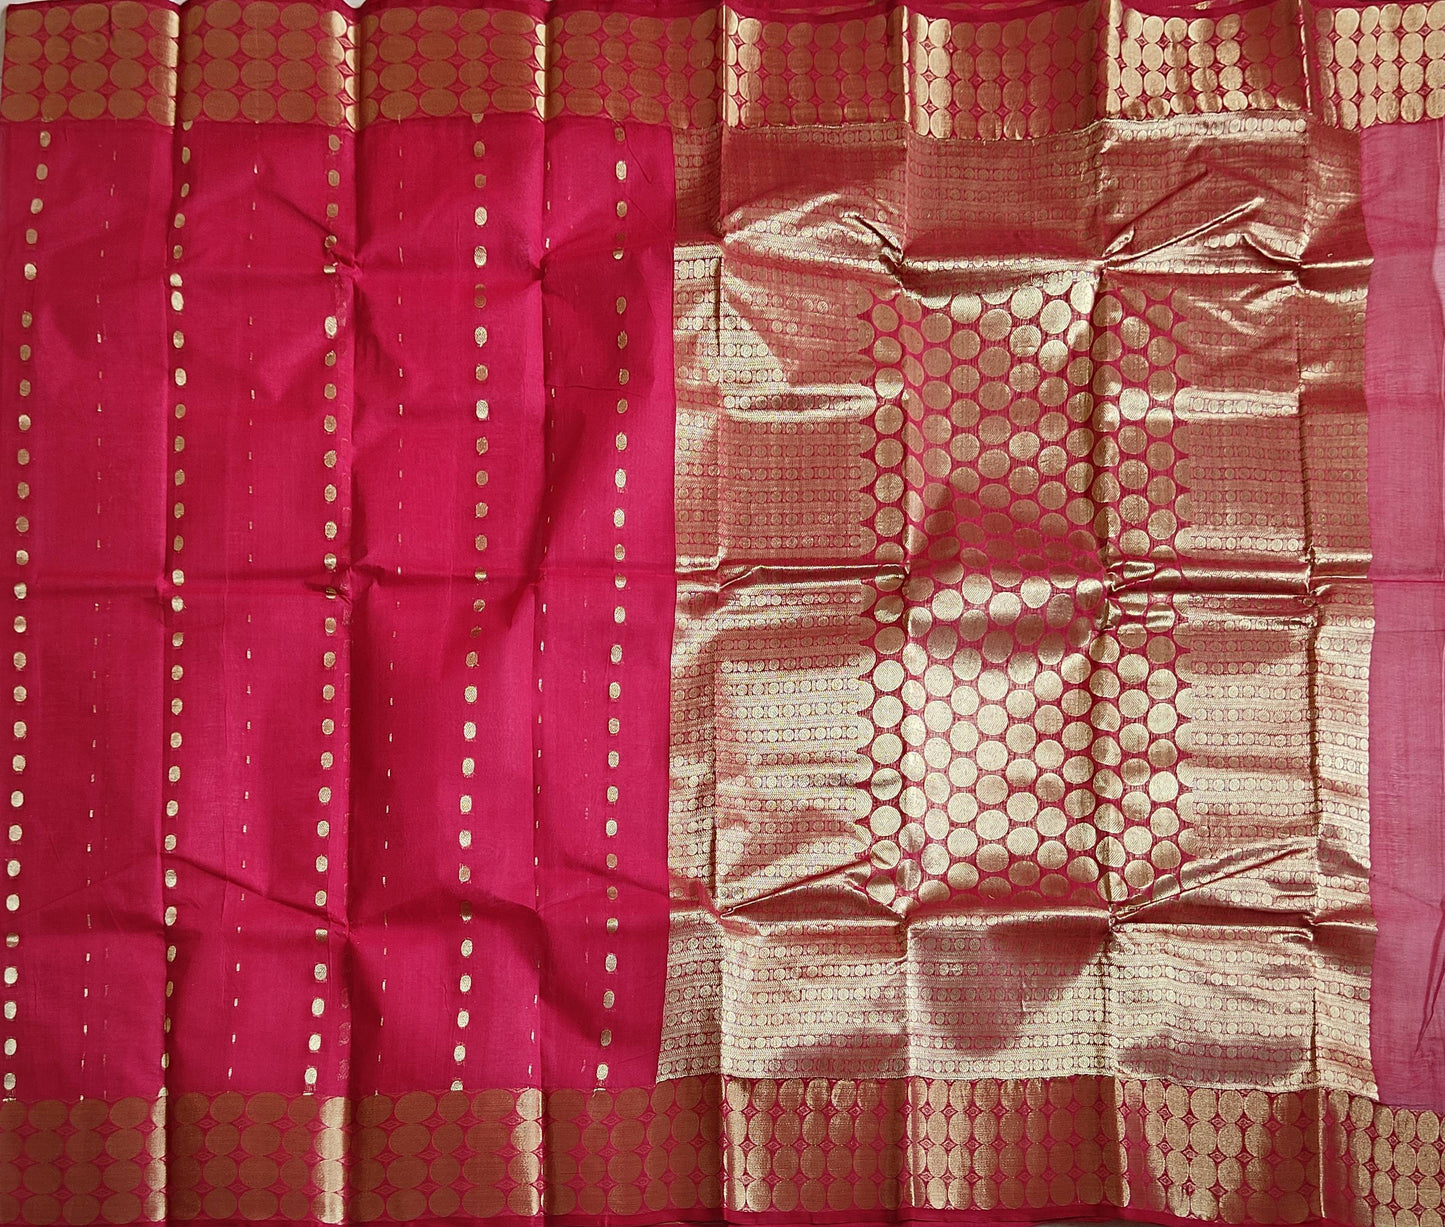 Pradip Fabrics Woven Red Color Pure Tant cotton  Saree